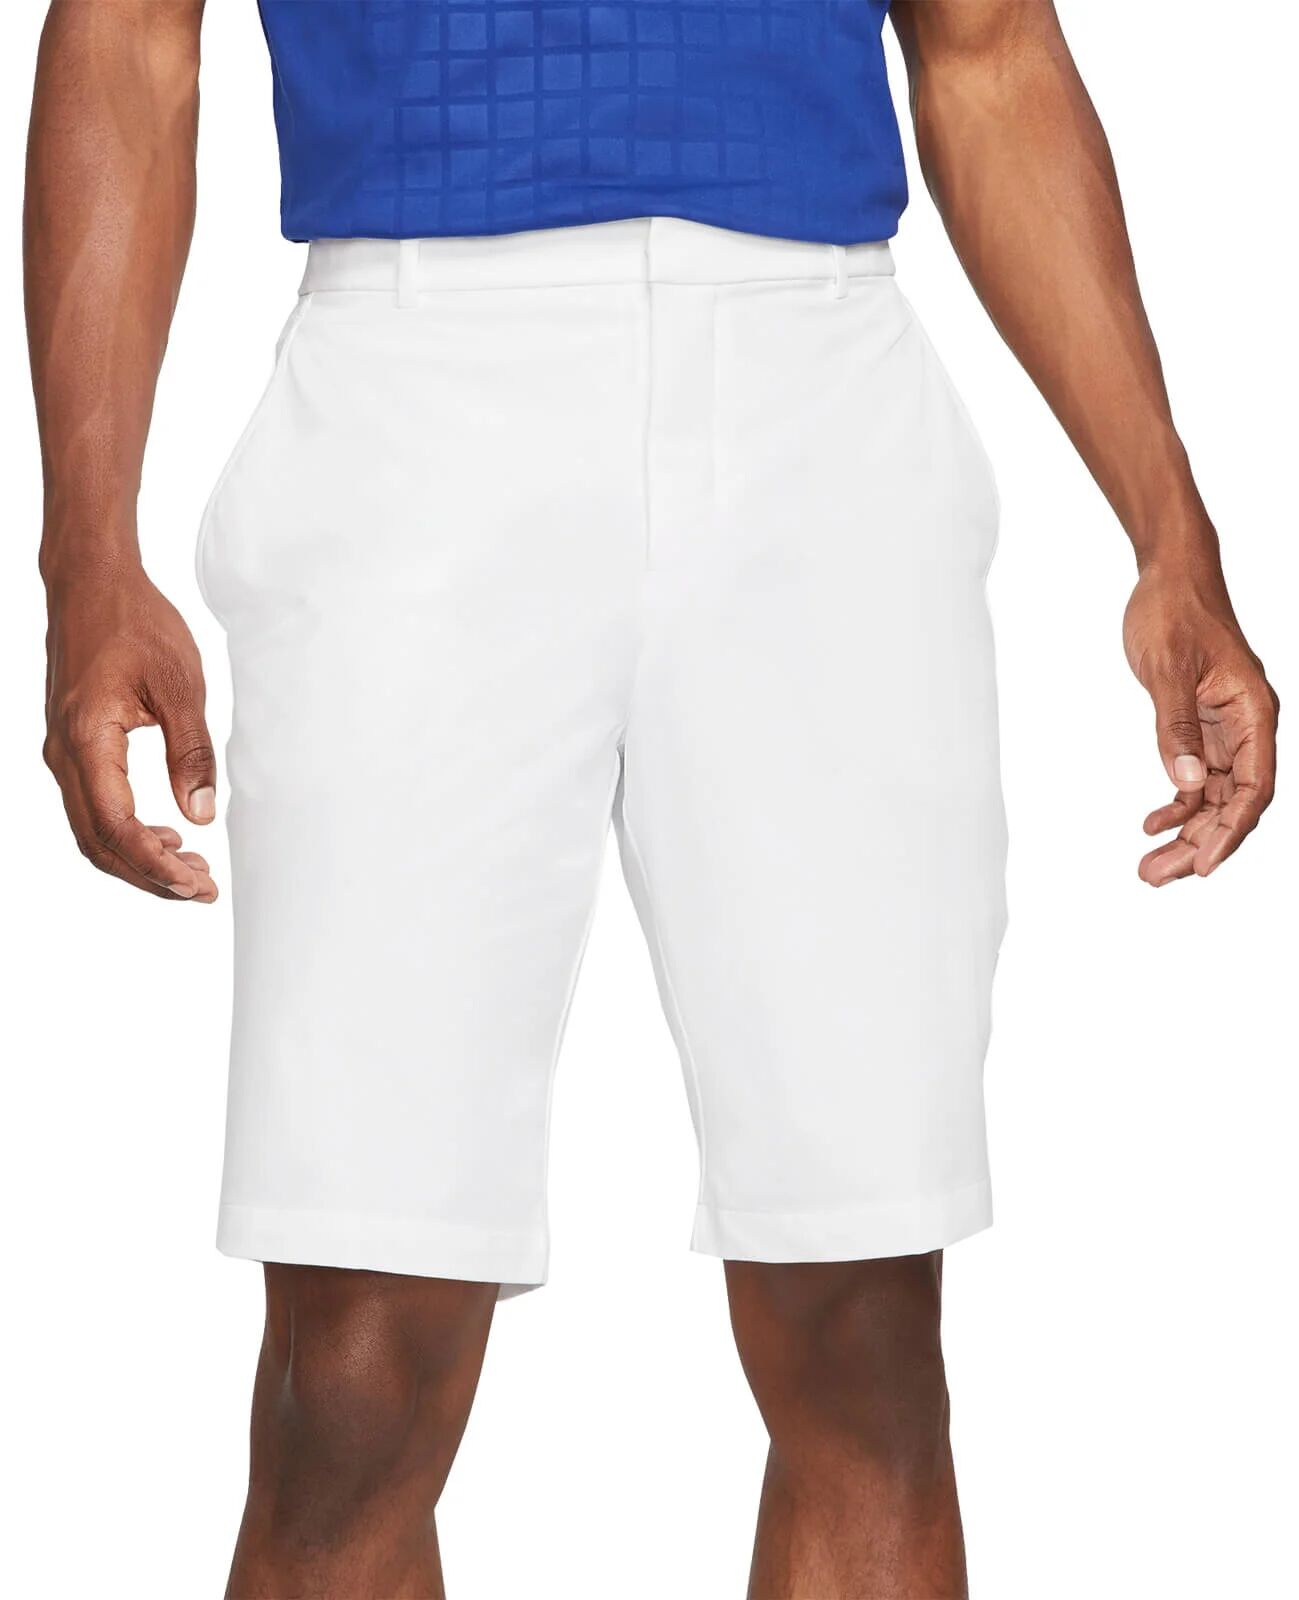 Nike Dri-FIT Men's Golf Shorts - White, Size: 34